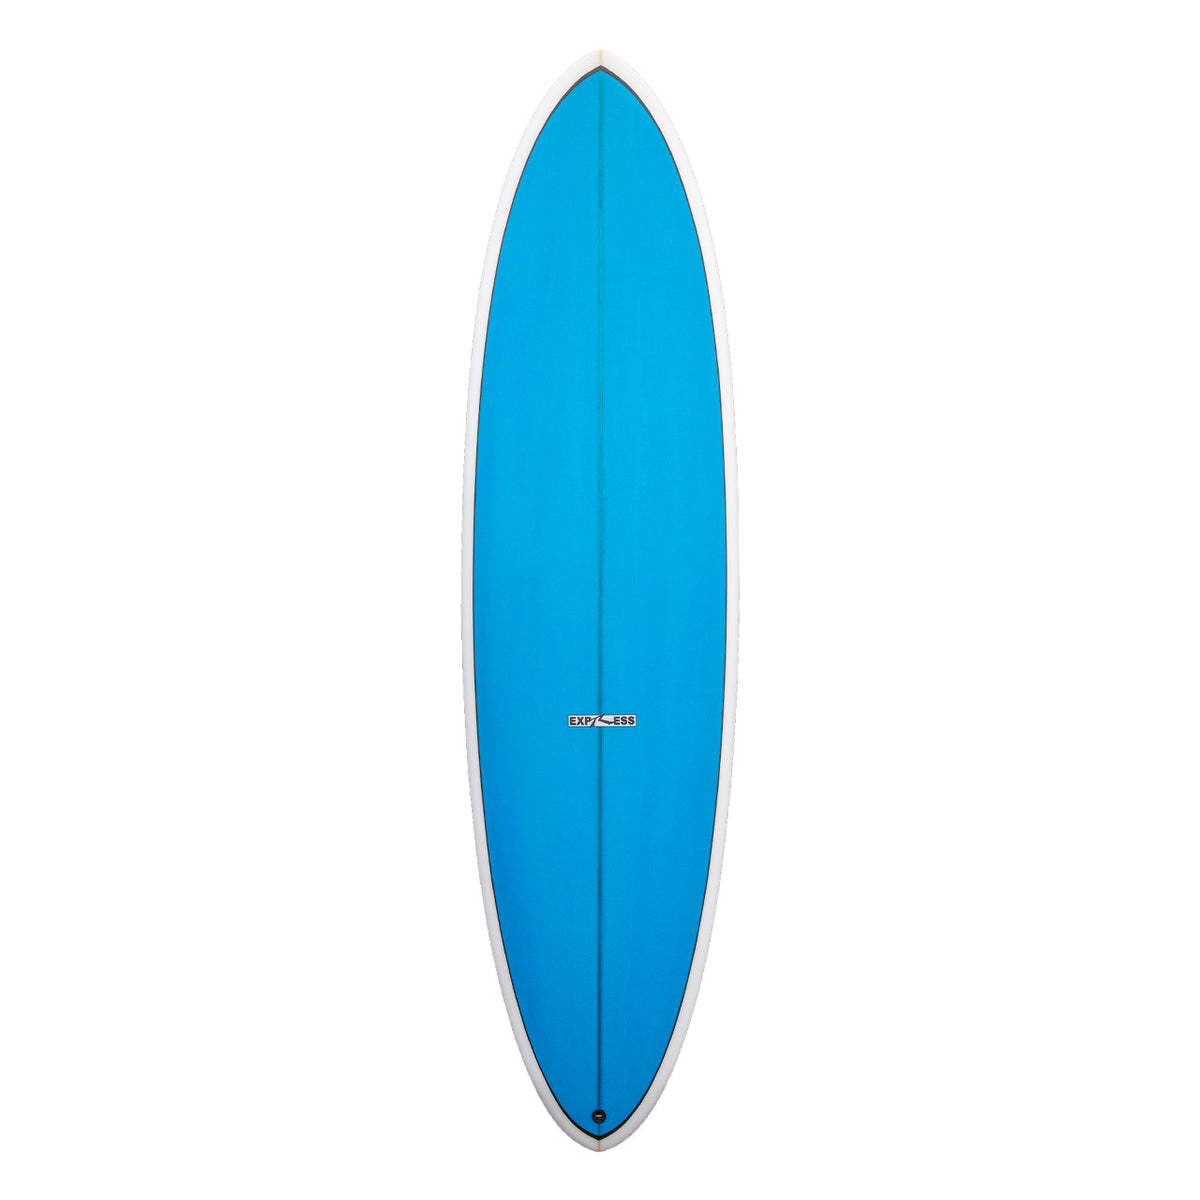 Express Midlength Surfboard - Blue - Deck - Rusty Surfboards 